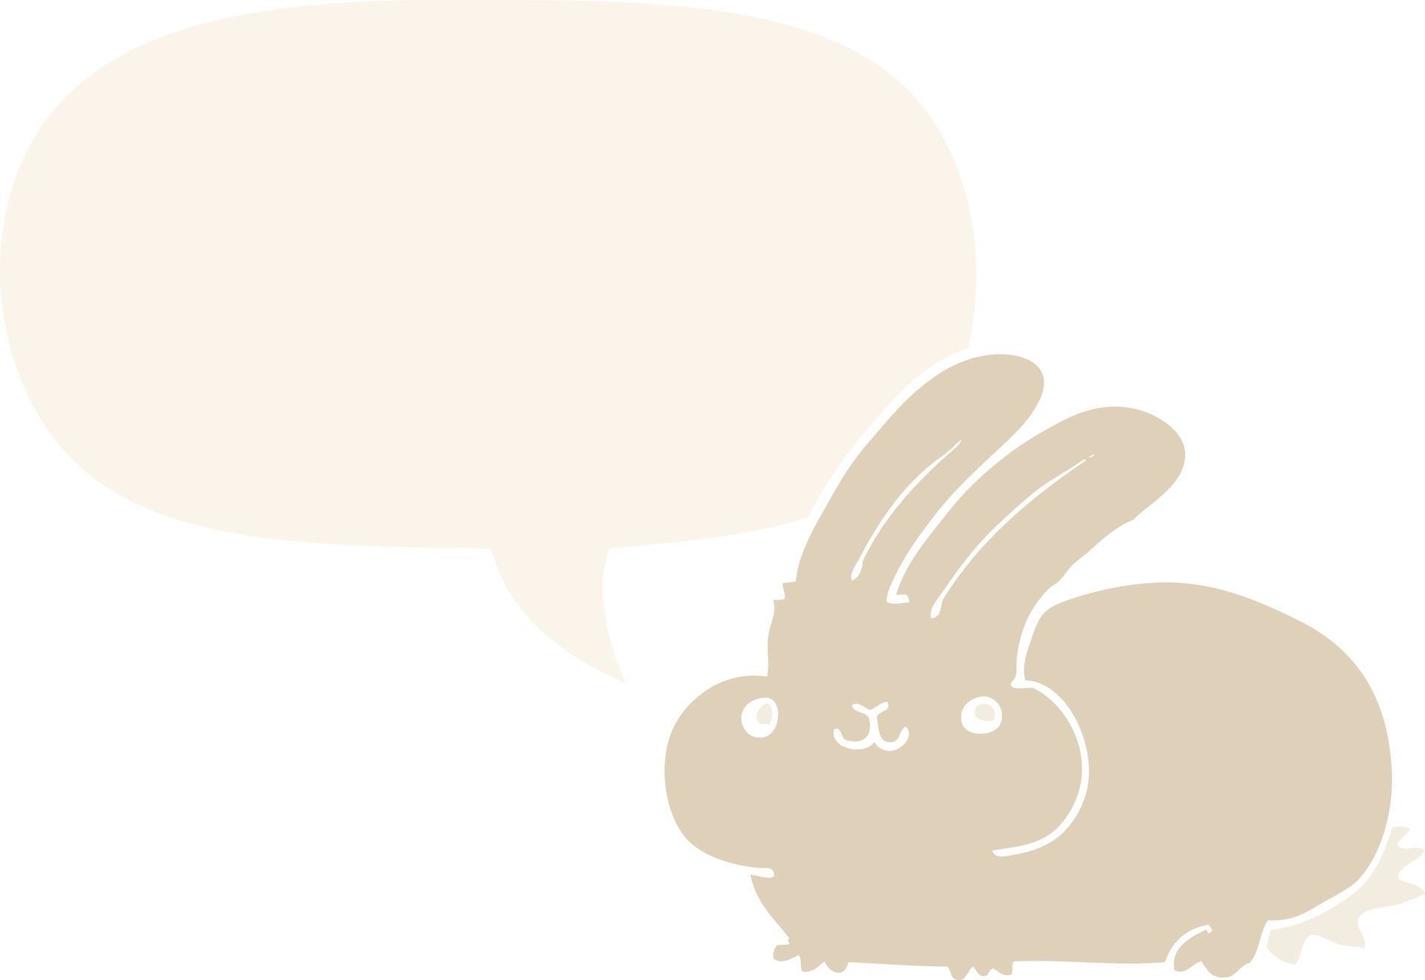 cartoon rabbit and speech bubble in retro style vector